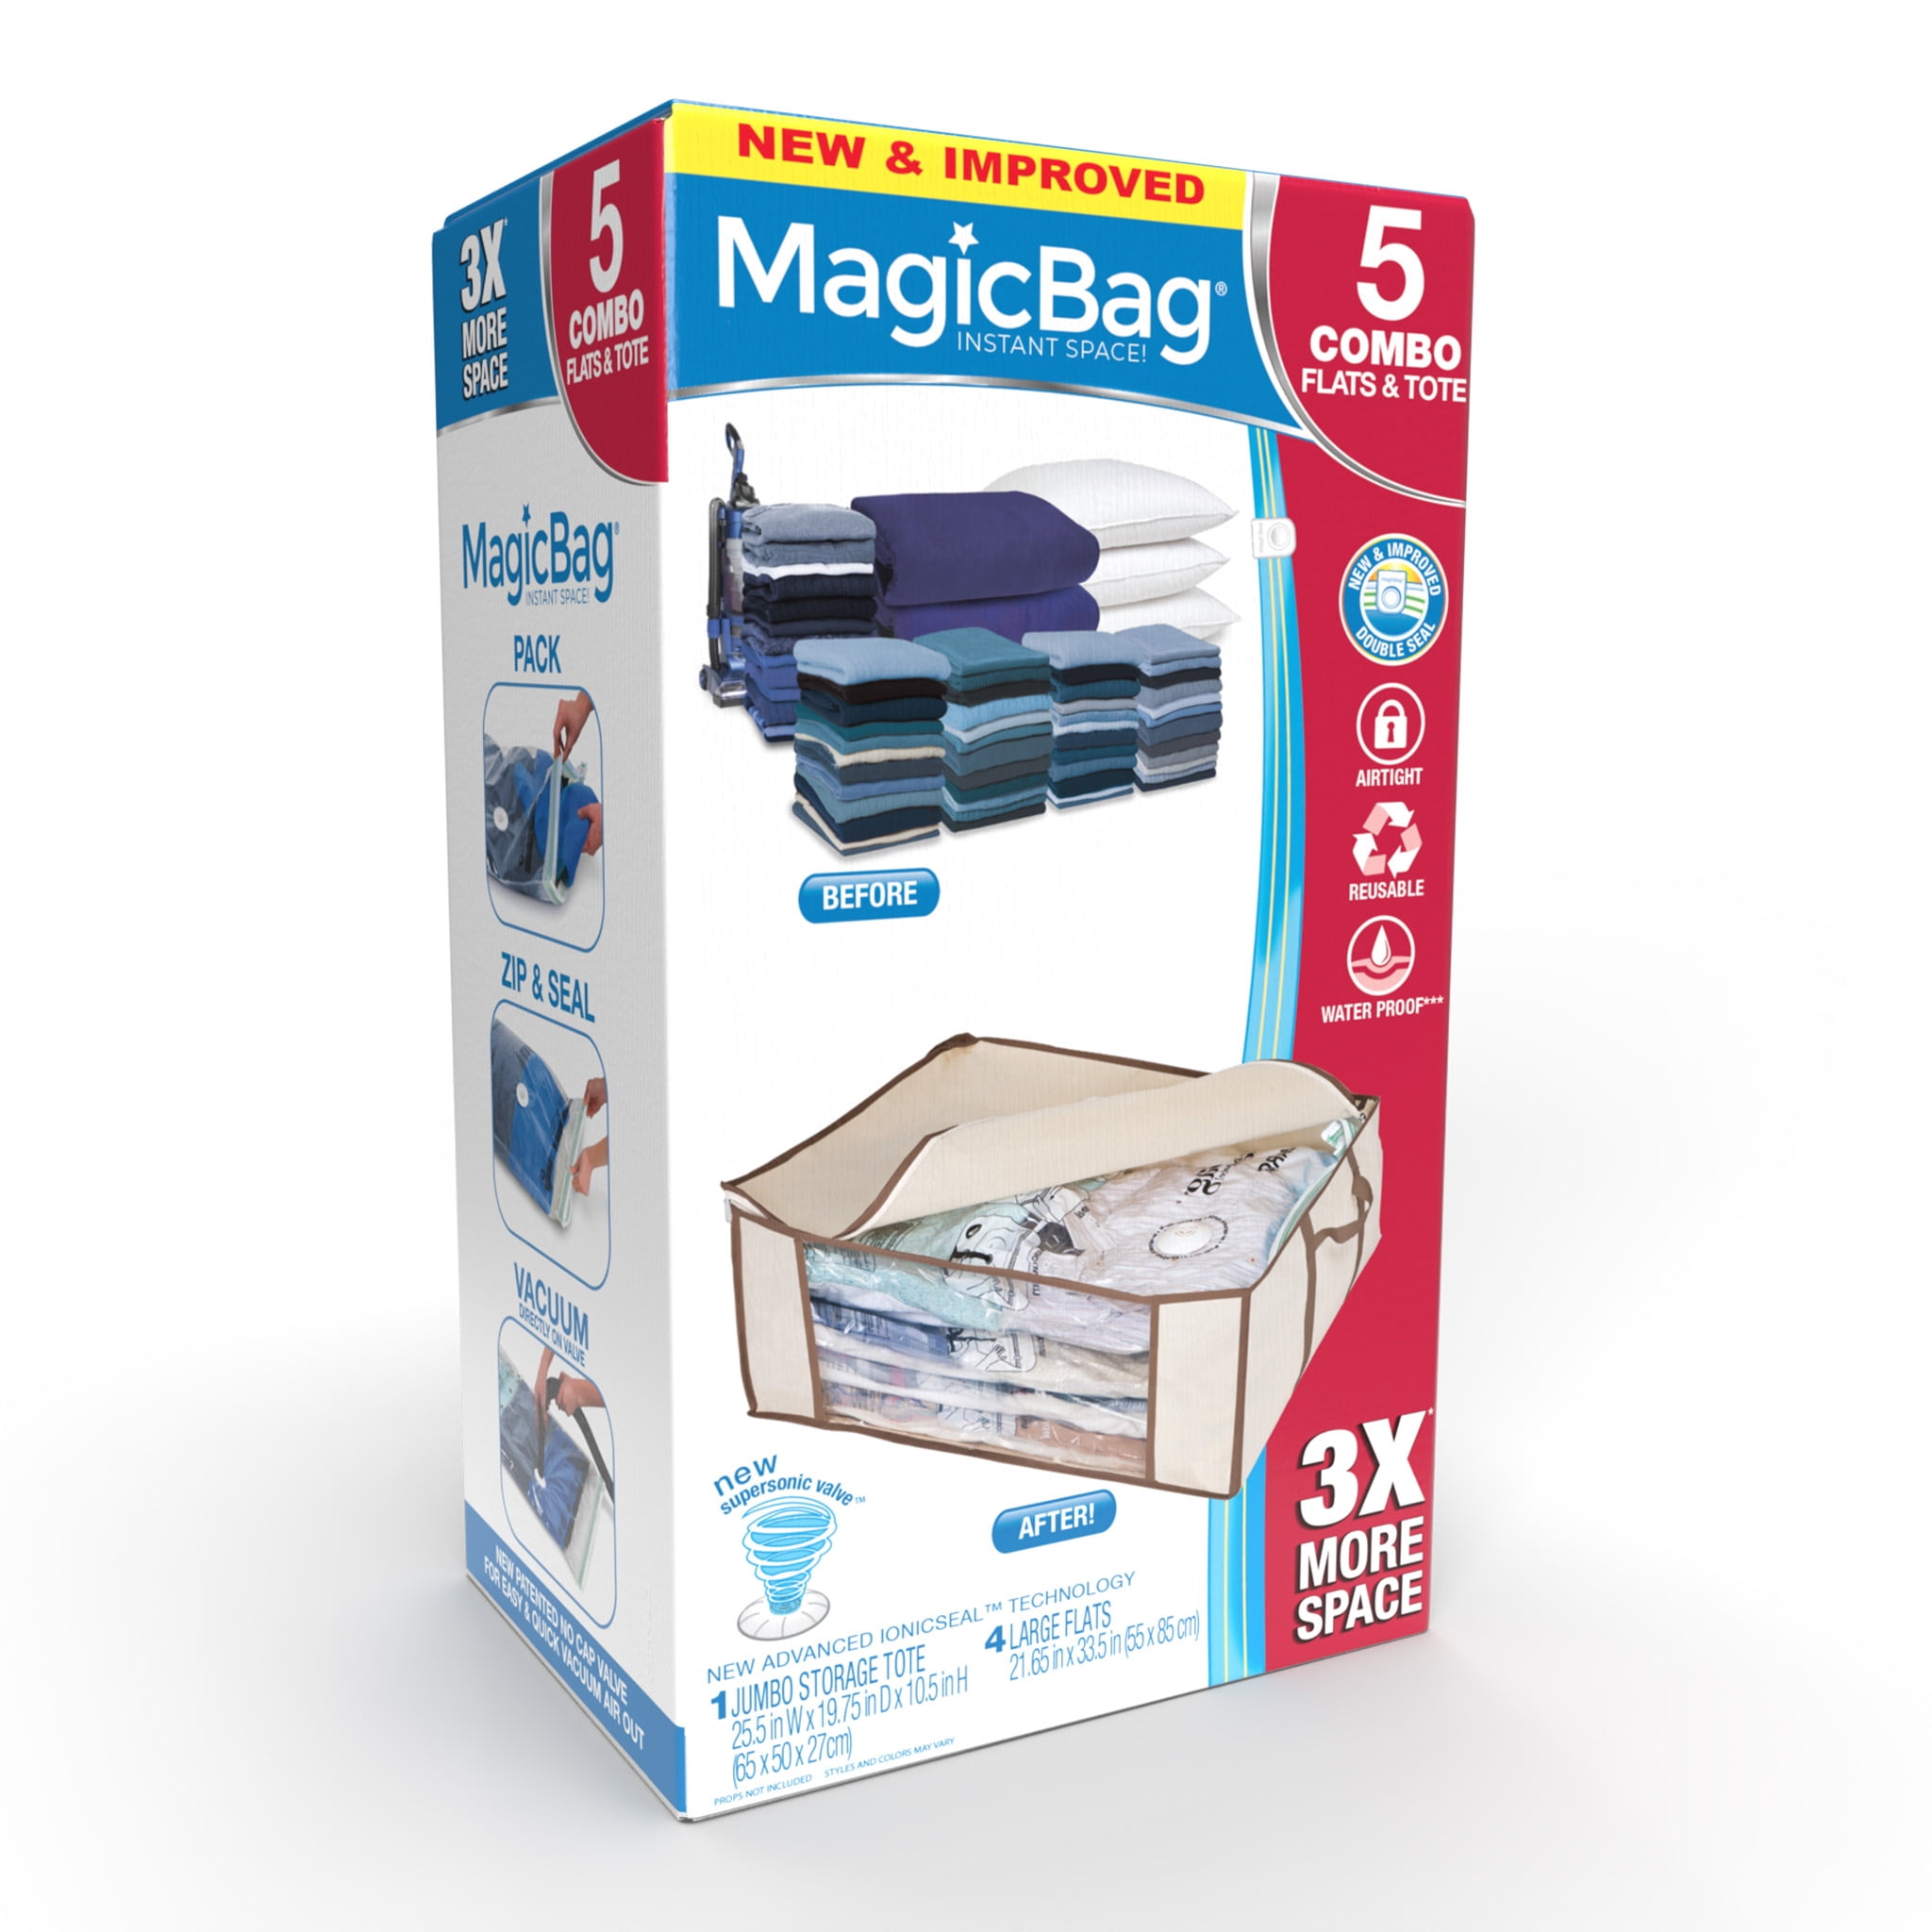 Magicbag Original Large, Instant Space, Storage Bags, 6pk